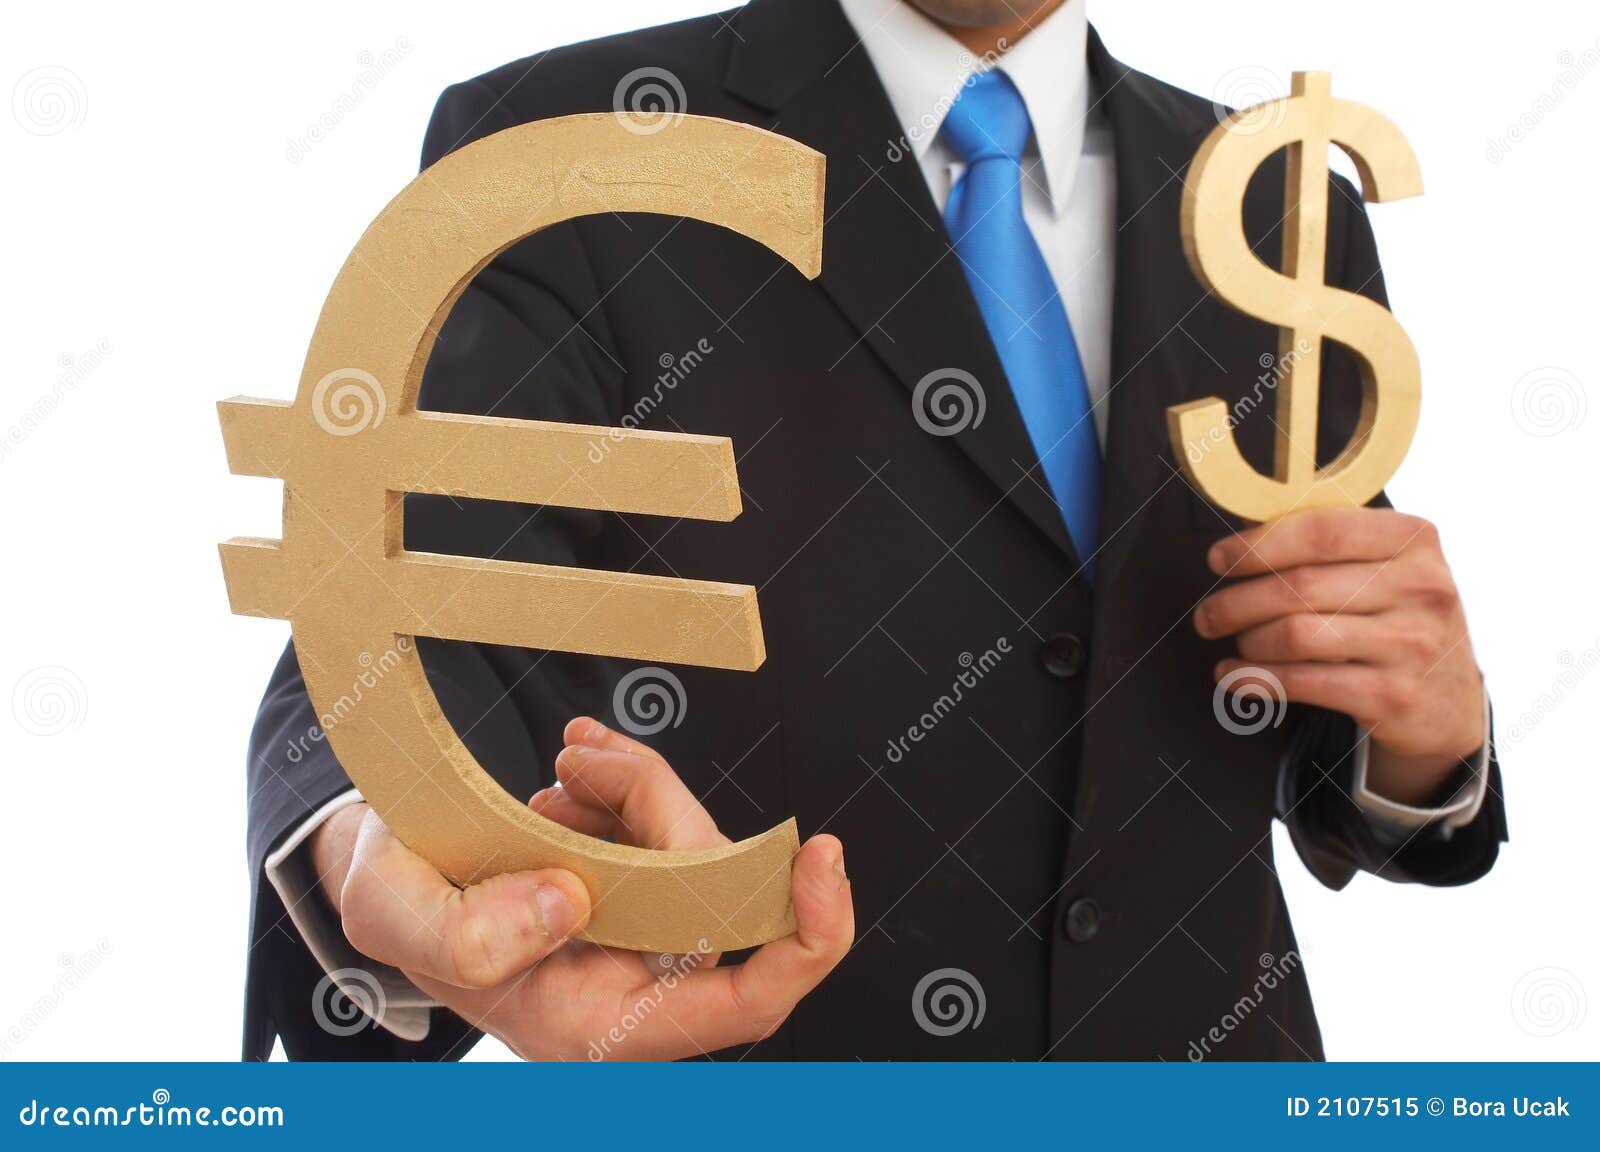 dollar or euro